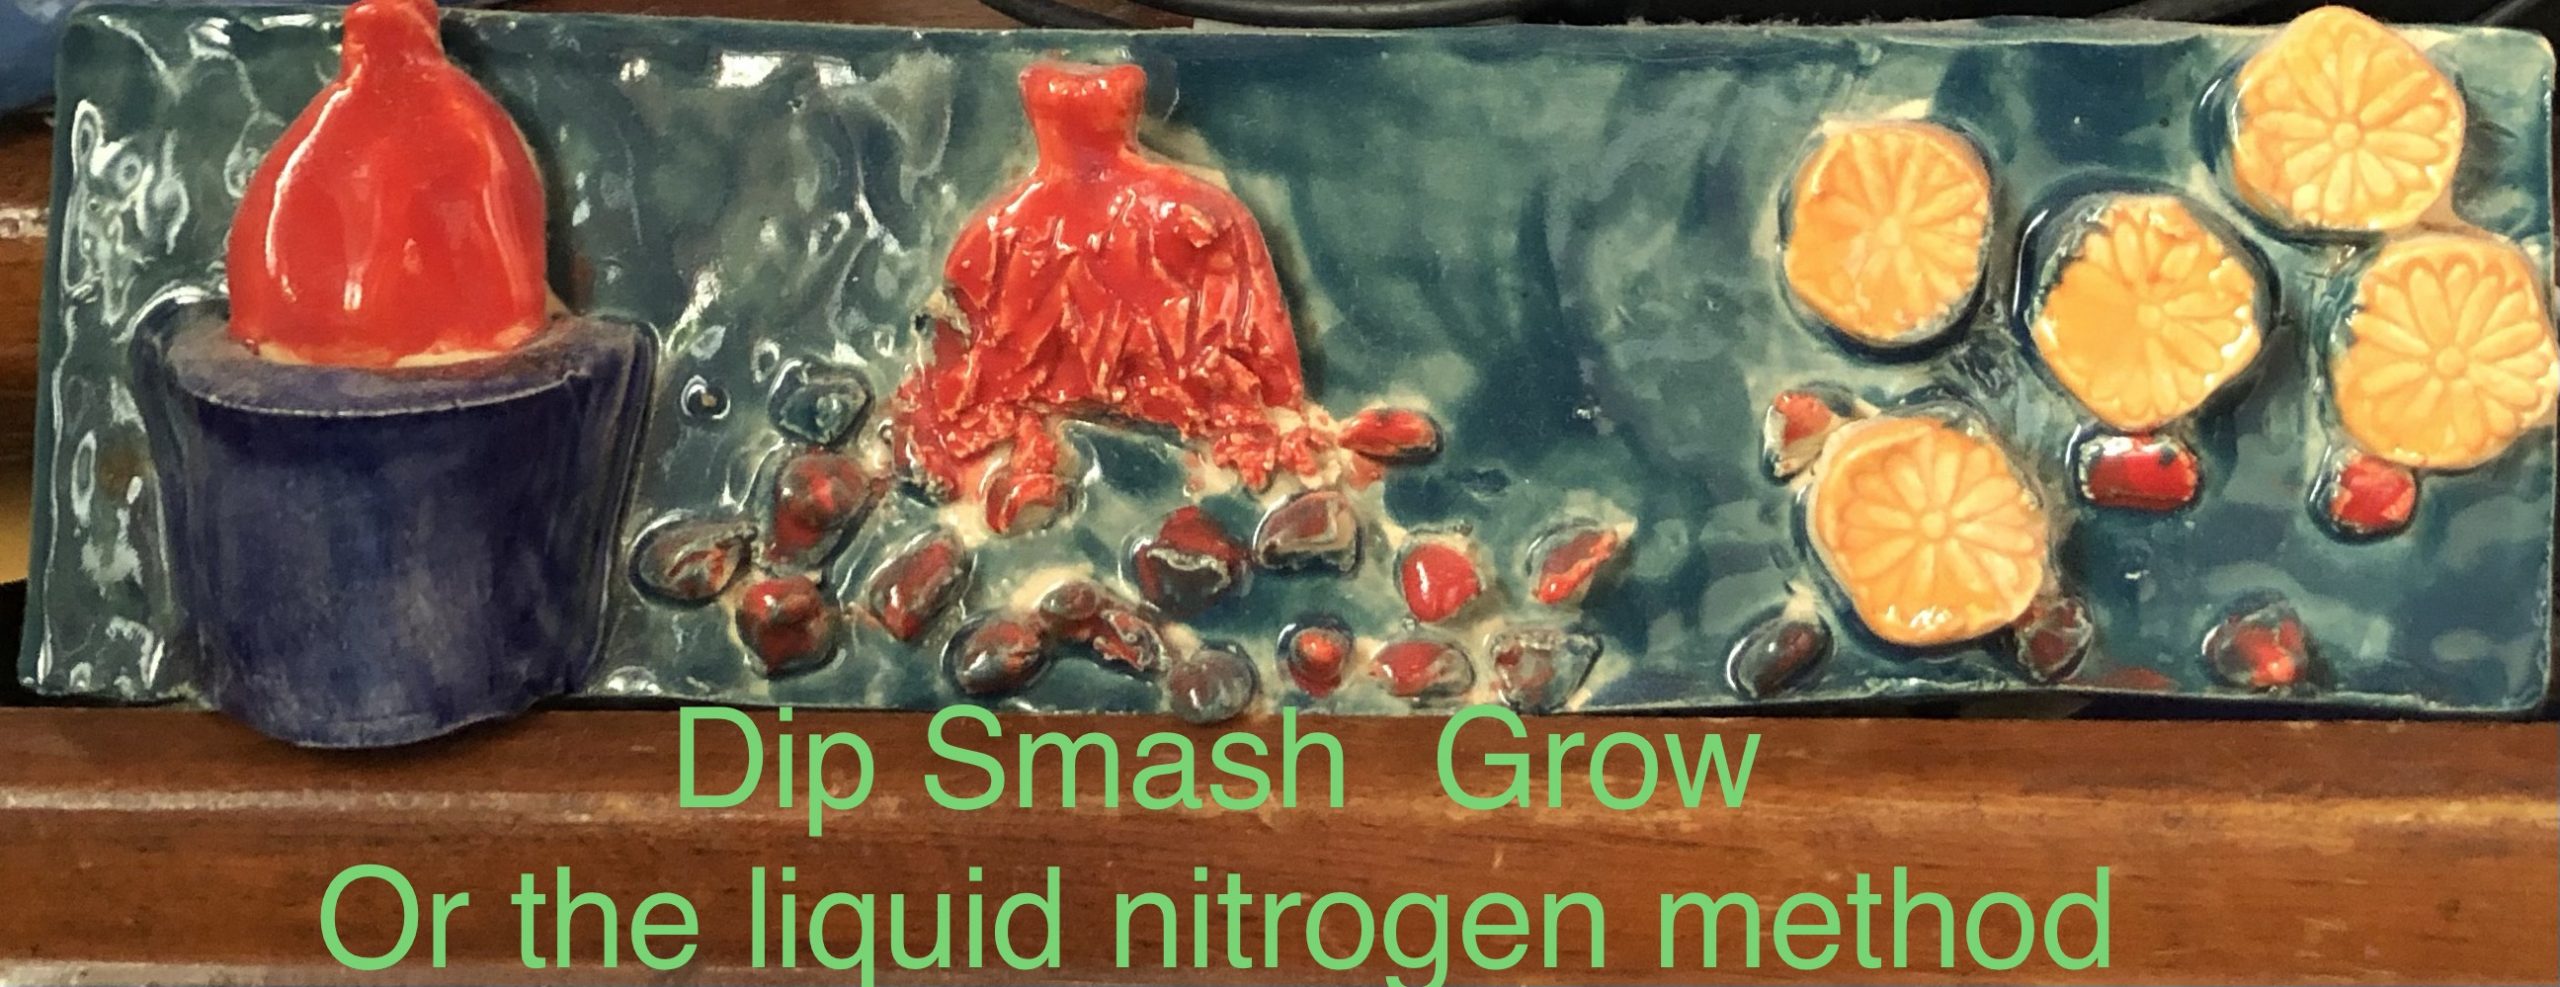  Dip Smash Grow or the Liquid Nitrogen Method